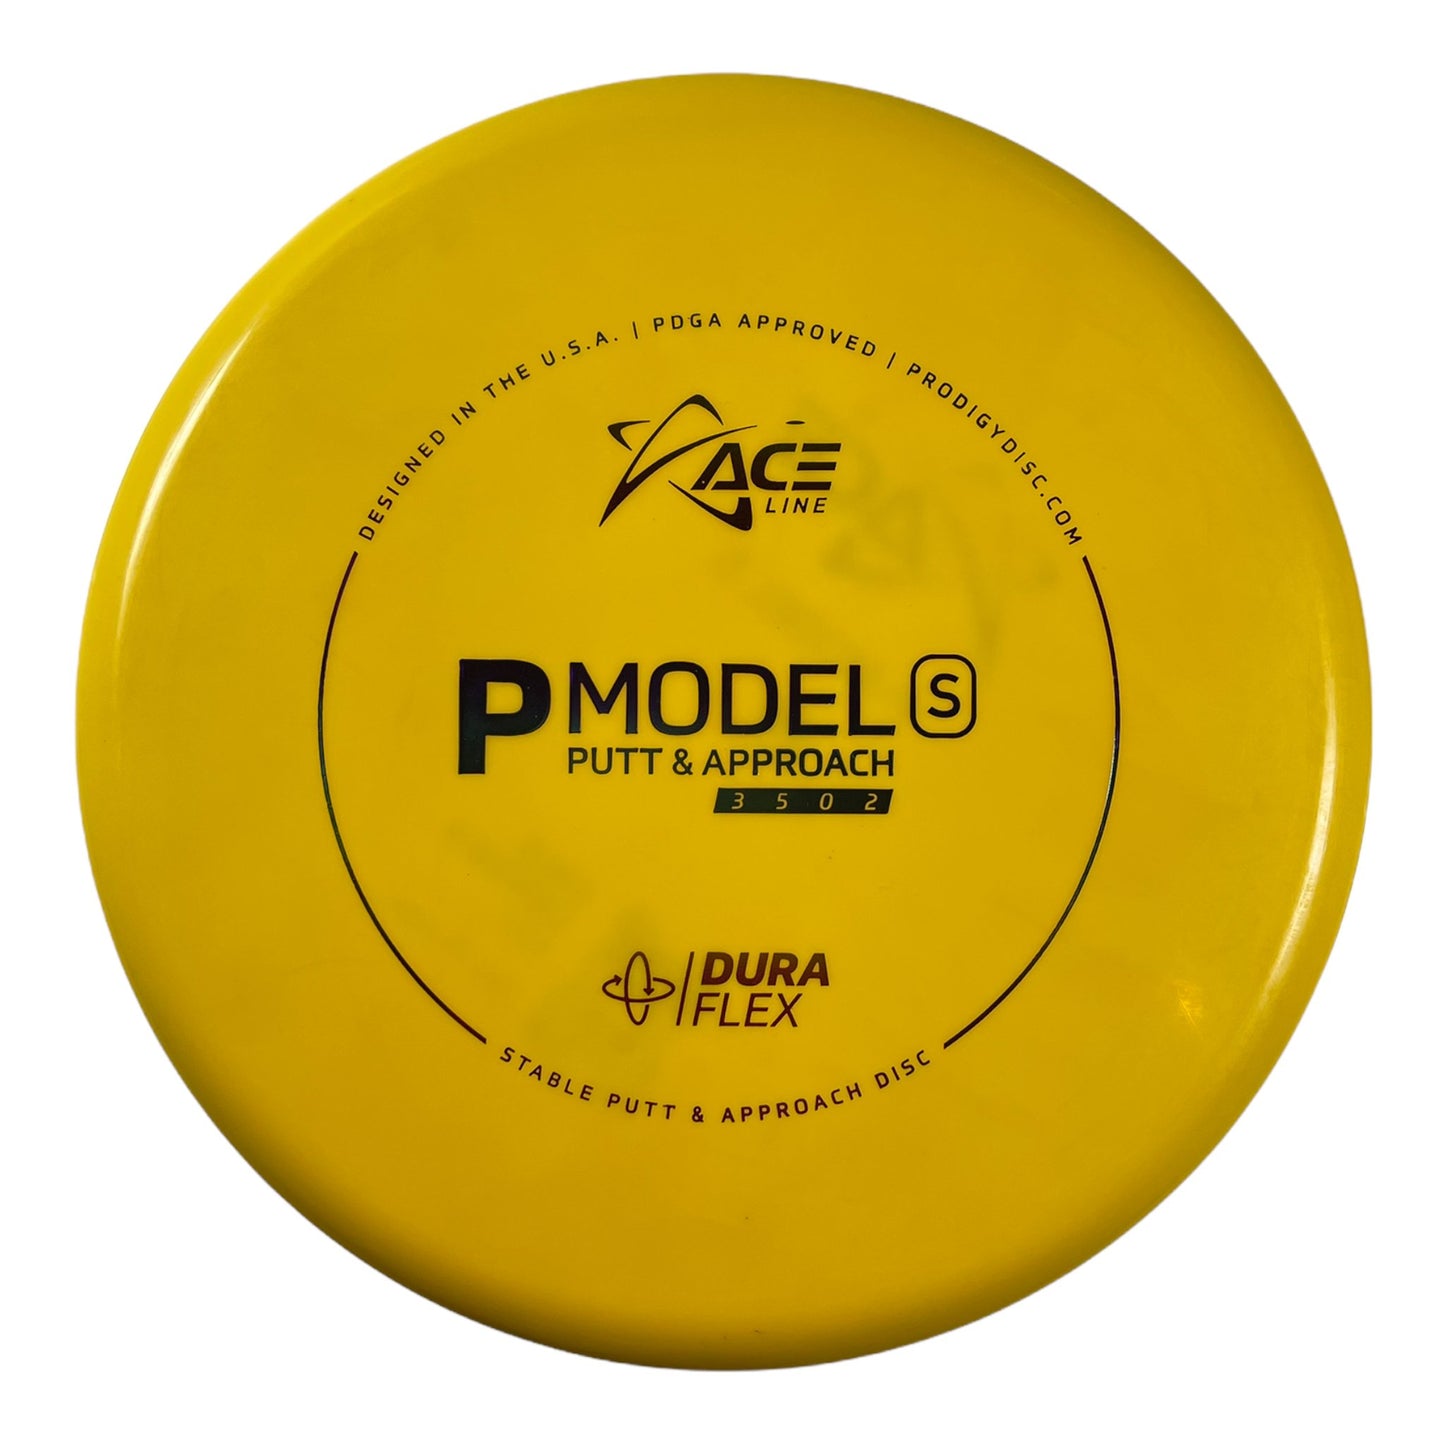 Prodigy Disc P Model S | Dura Flex | Yellow/Rainbow 174g Disc Golf